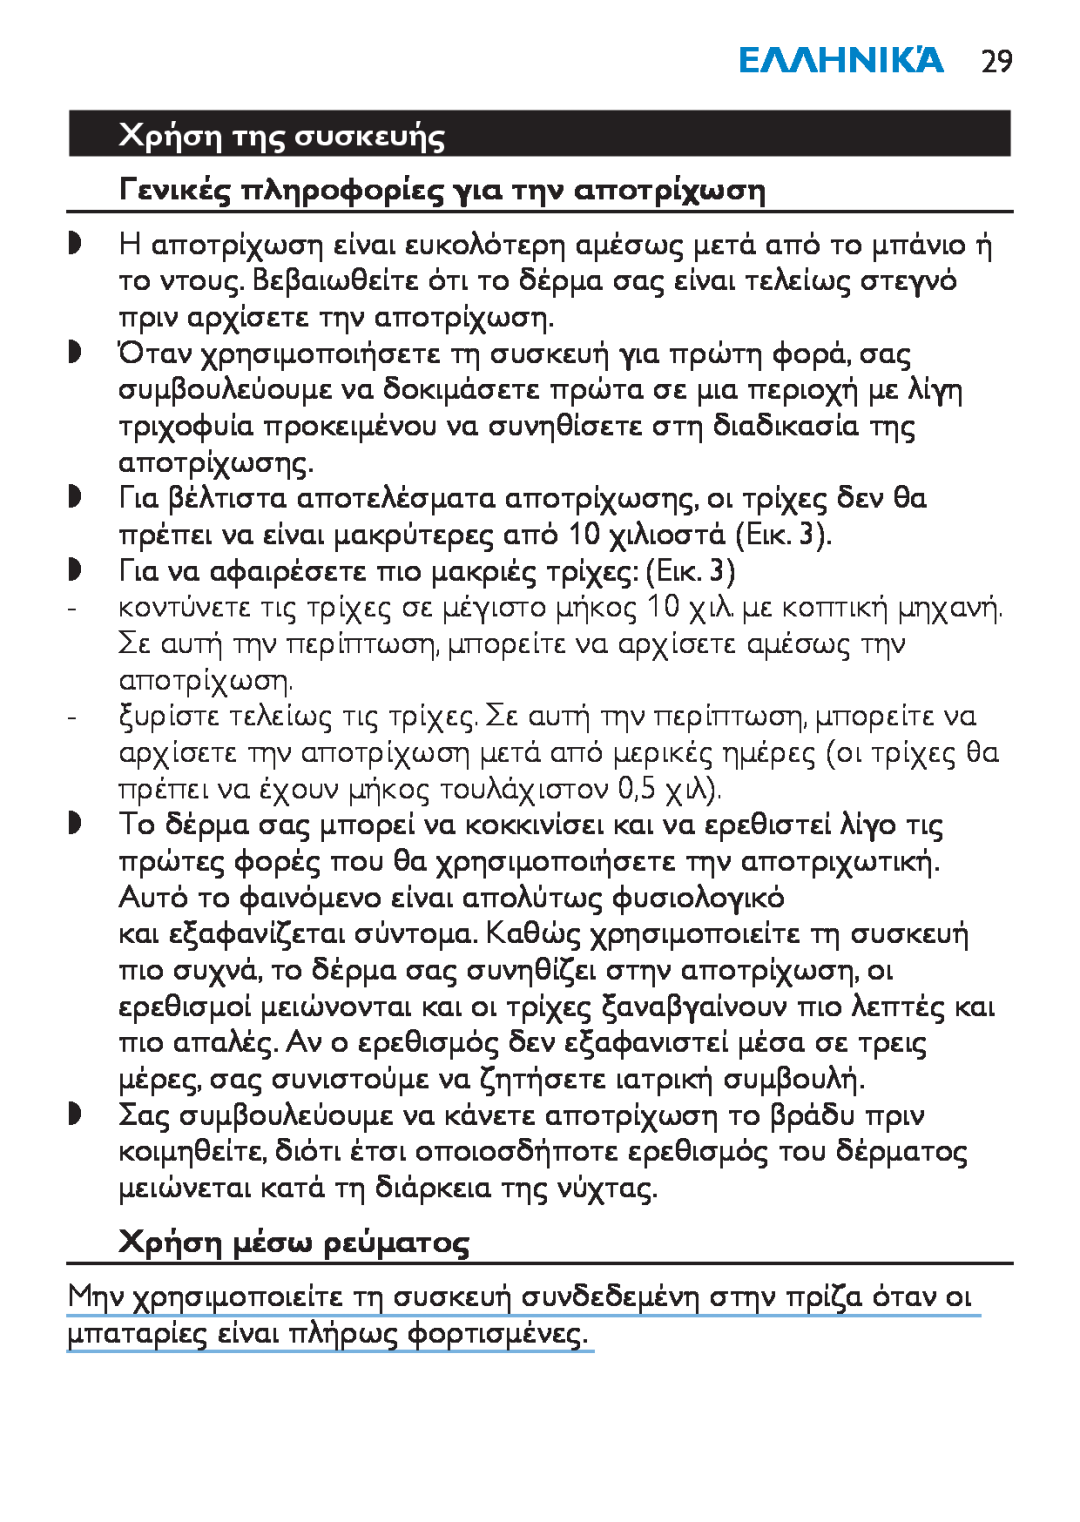 Philips HP6490 manual Χρήση της συσκευής, Γενικές πληροφορίες για την αποτρίχωση, Χρήση μέσω ρεύματος, Ελληνικά 